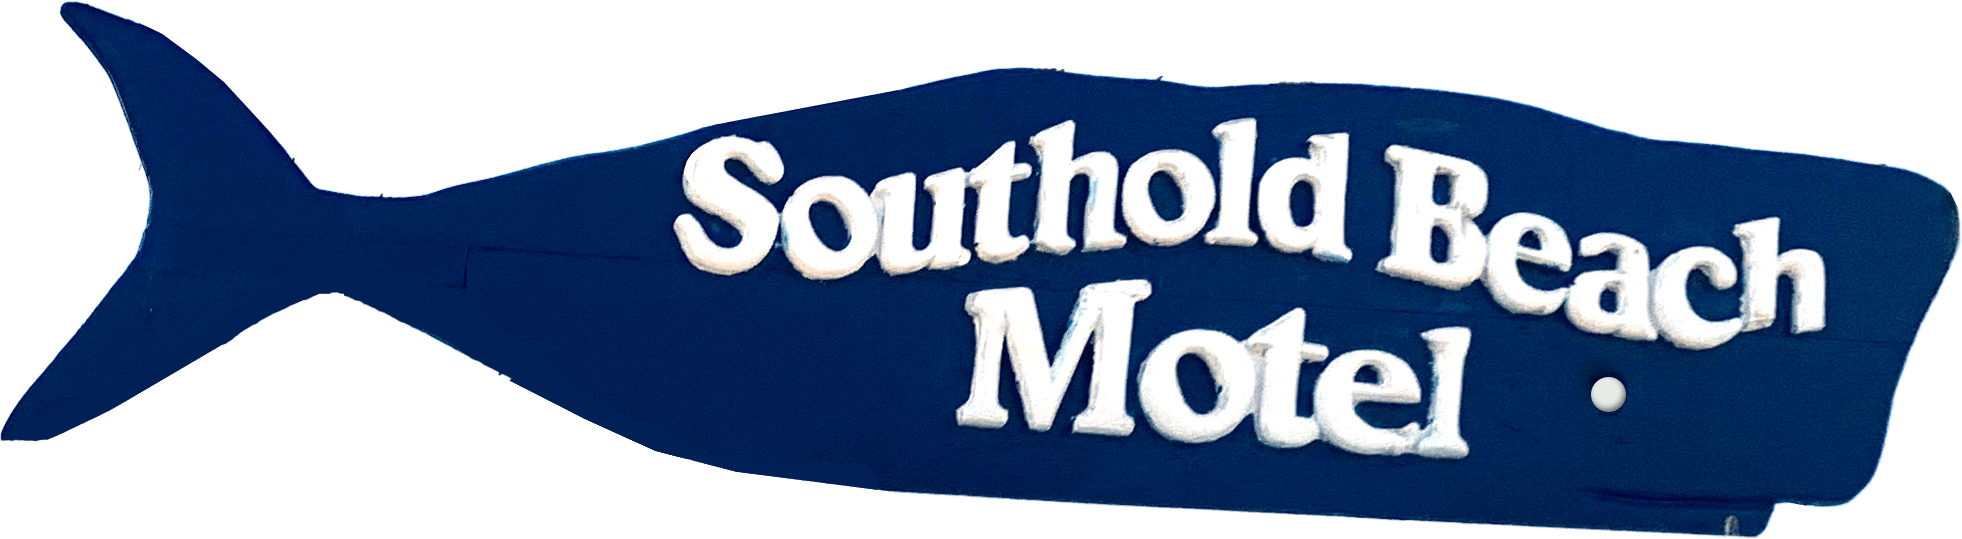 Southold beach motel - Logo